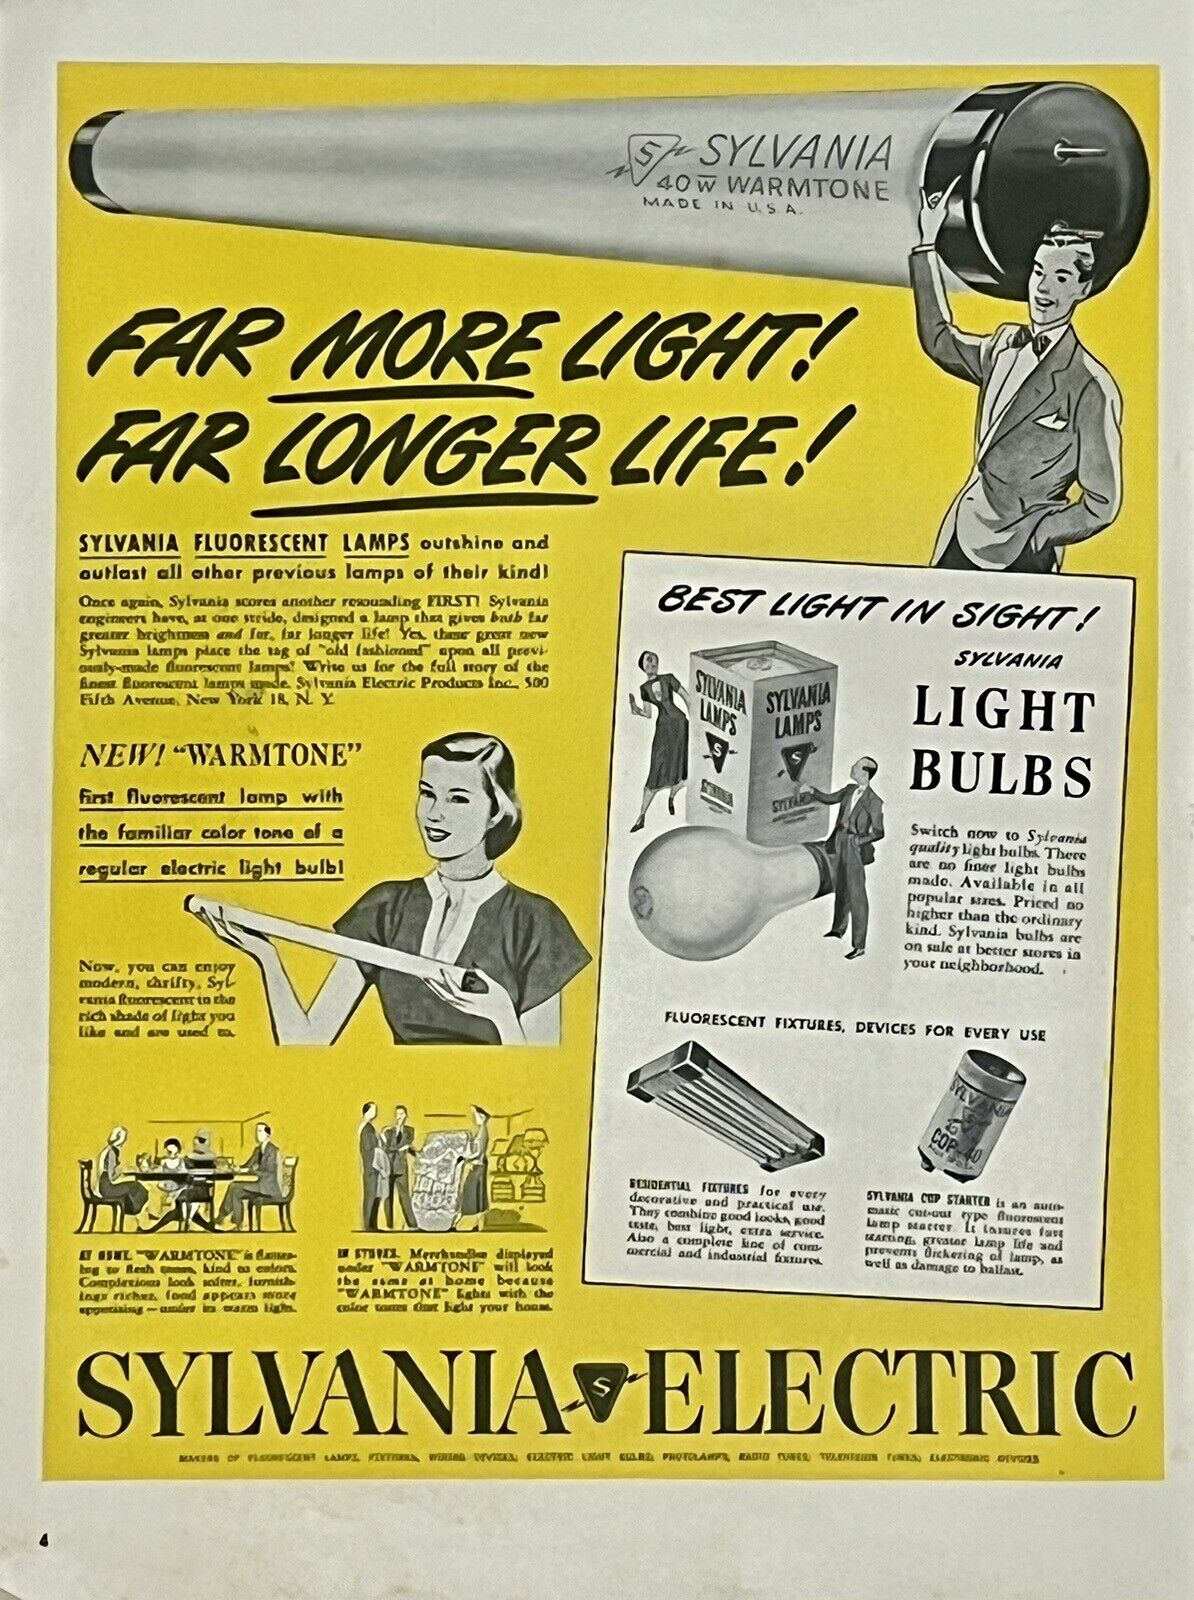 1948 Vtg Print Ad Sylvania Electric Fluorescent Lamps Bulbs Garage Man Cave Gift